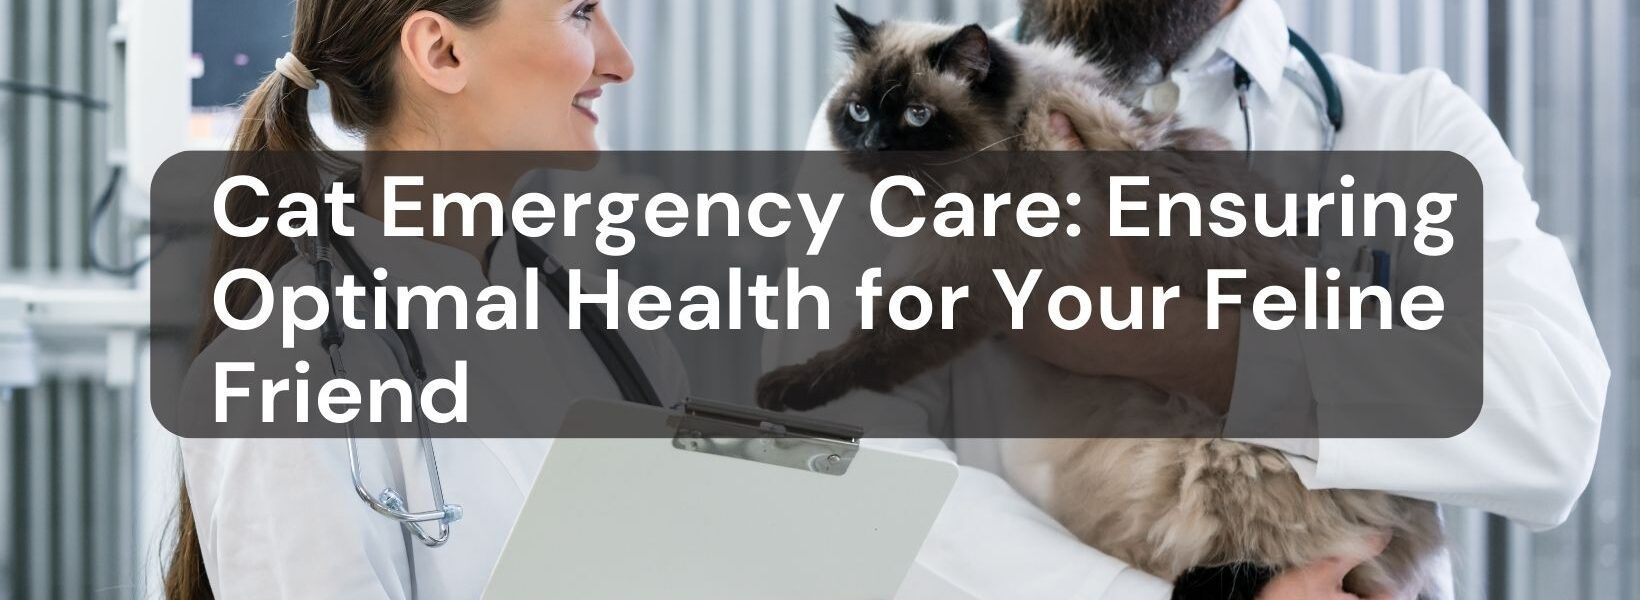 Cat Emergency Care